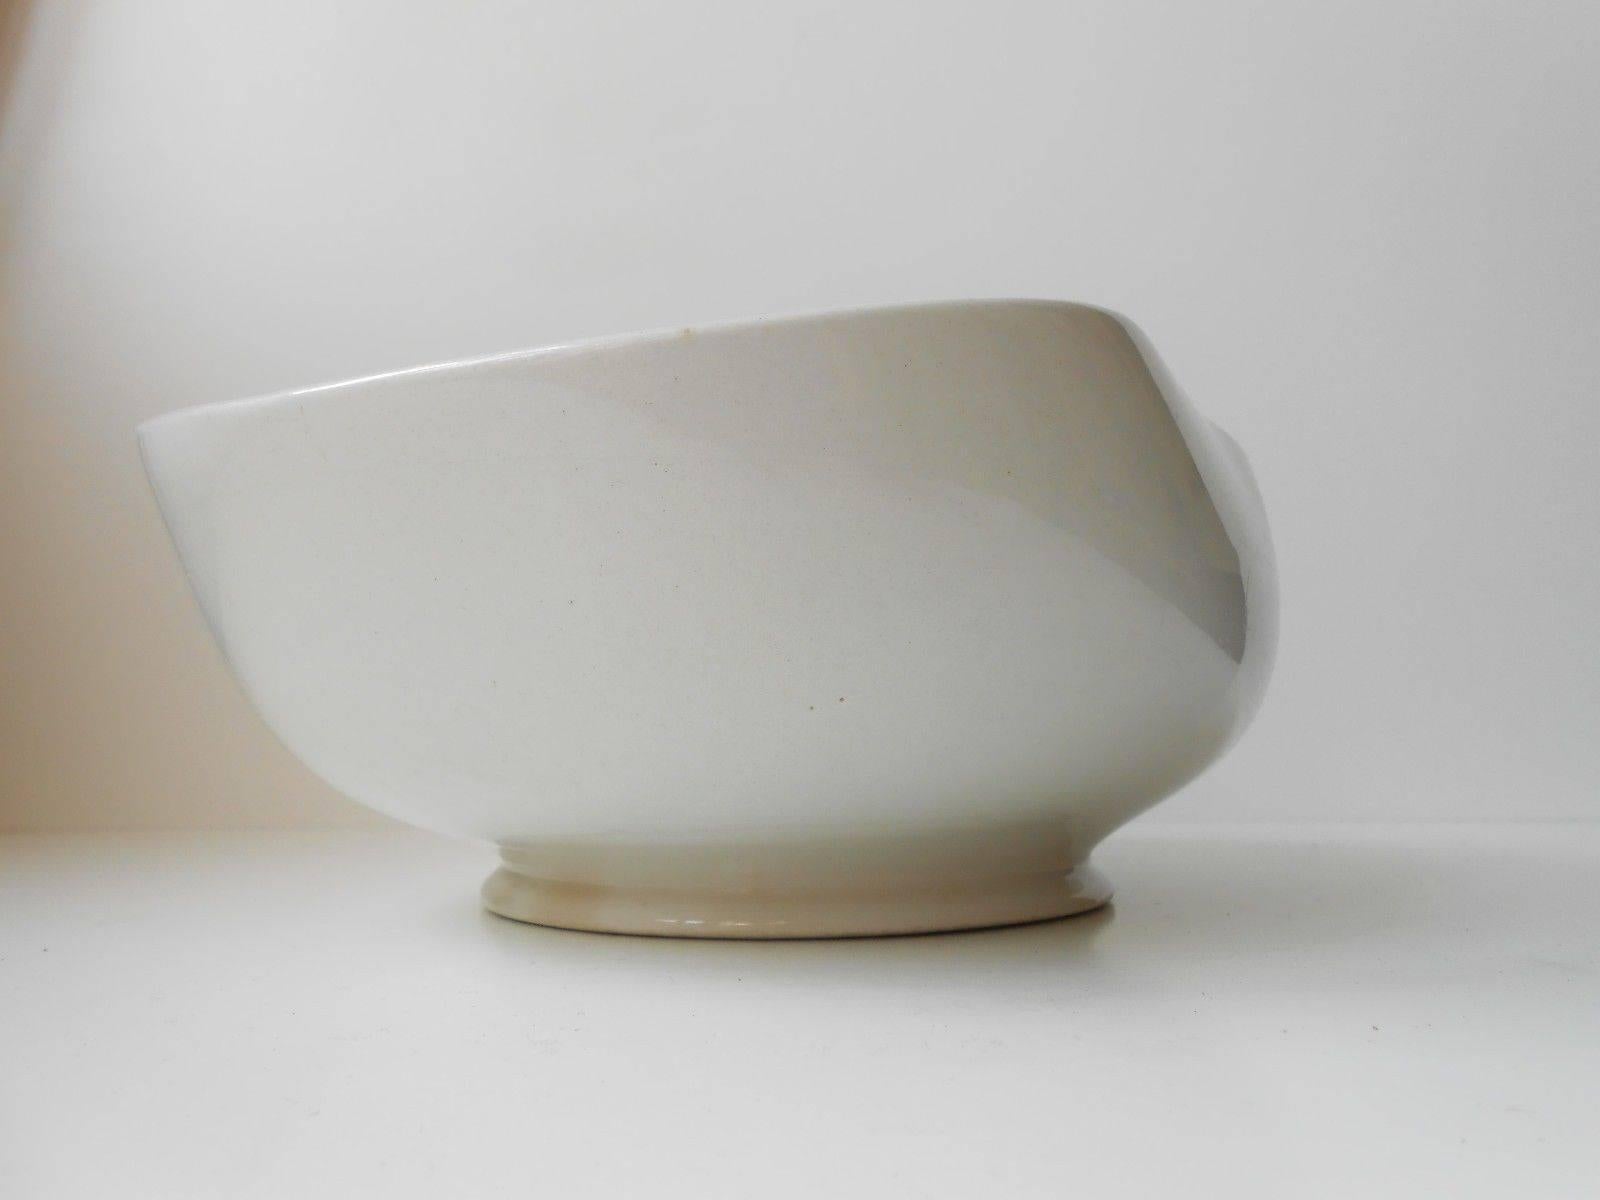 Biomorphic 1930s White Earthenware Bowl by Wilhelm Kåge for Gustavsberg, Sweden 1